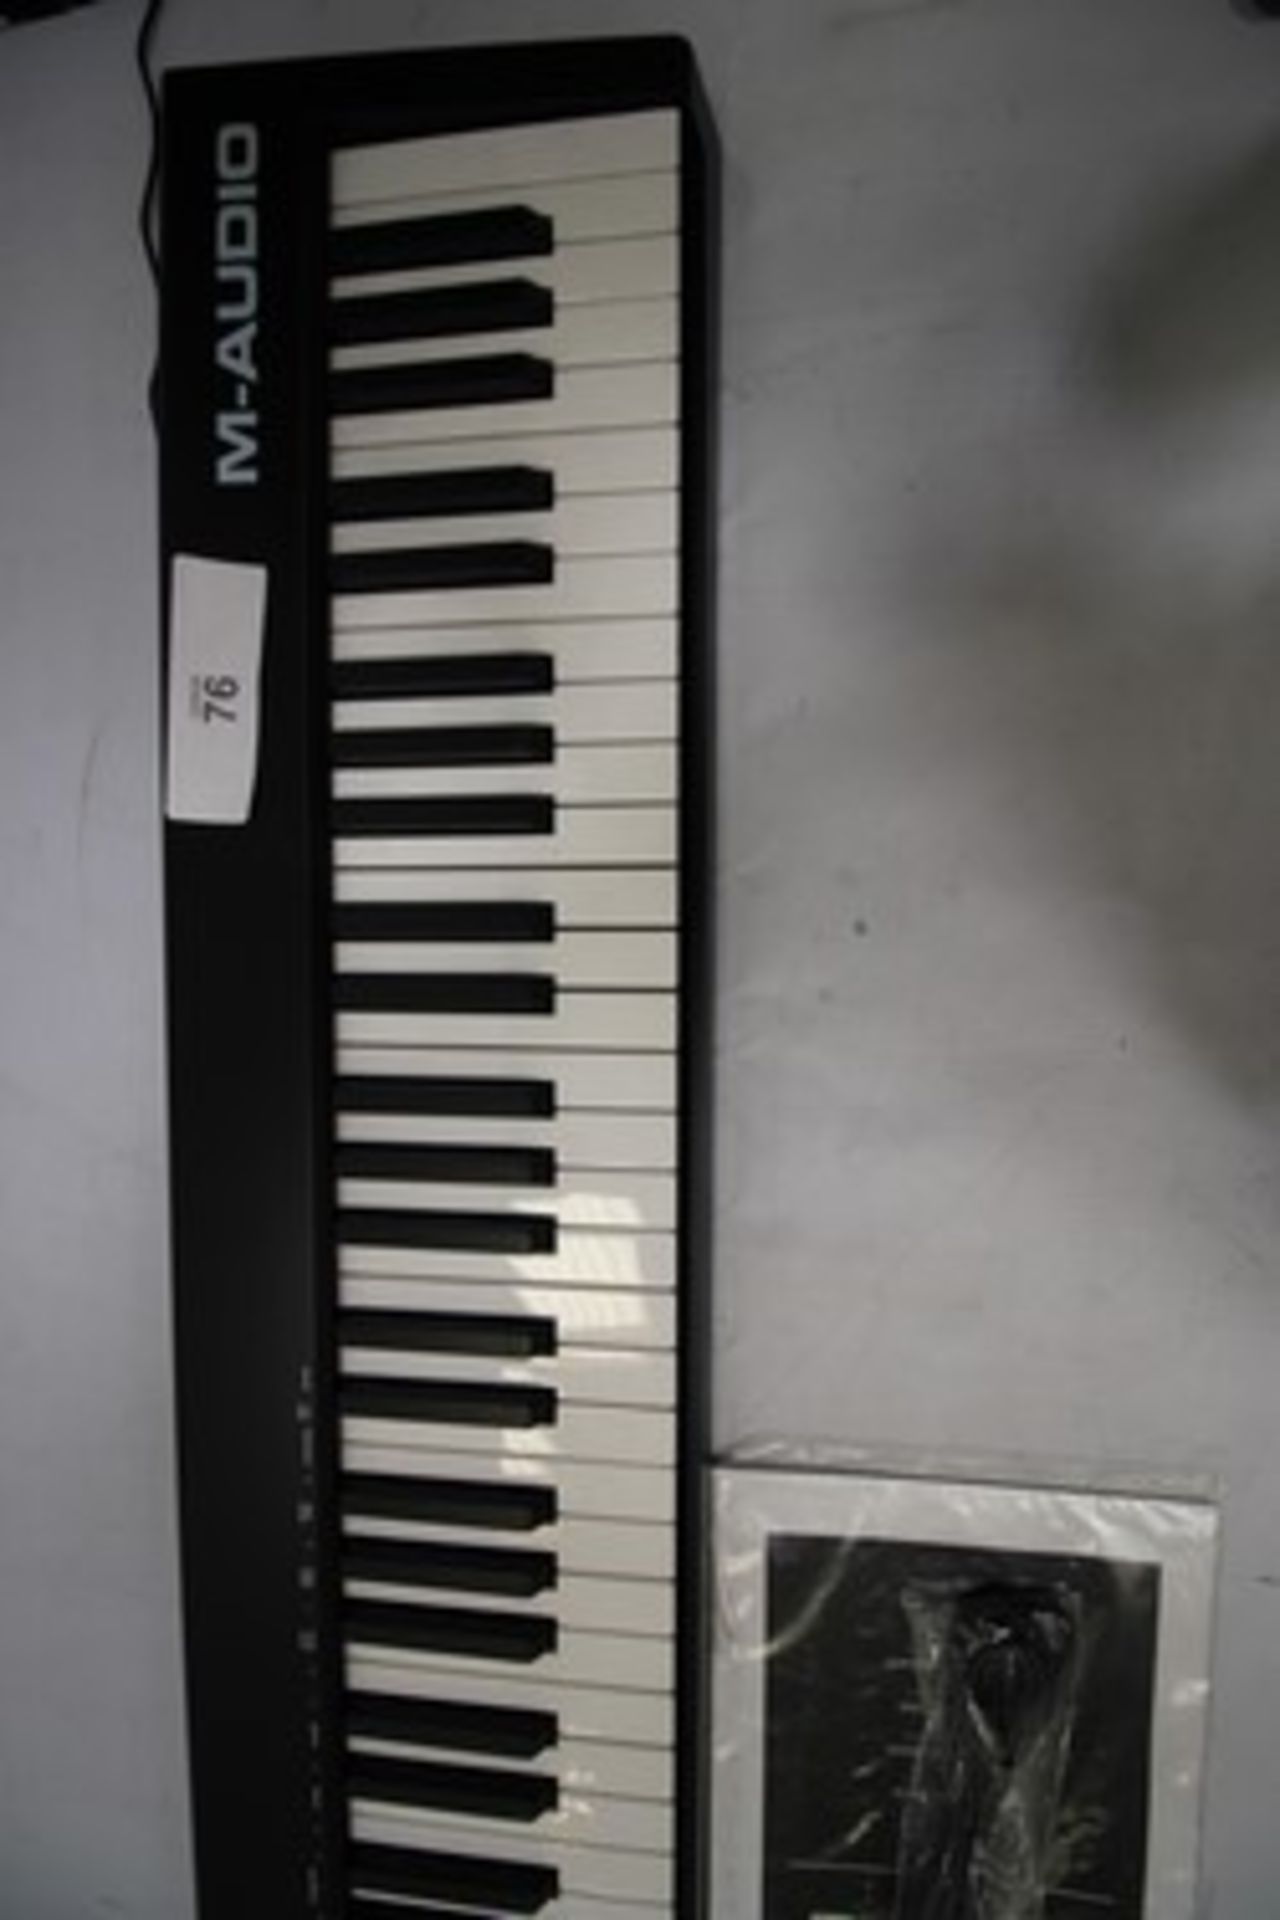 1 x M-Audio Keystation 88 MK3 midi keyboard, model No: CAN ICES-3 NMB-3 (B), powers on ok, not fully - Image 3 of 4